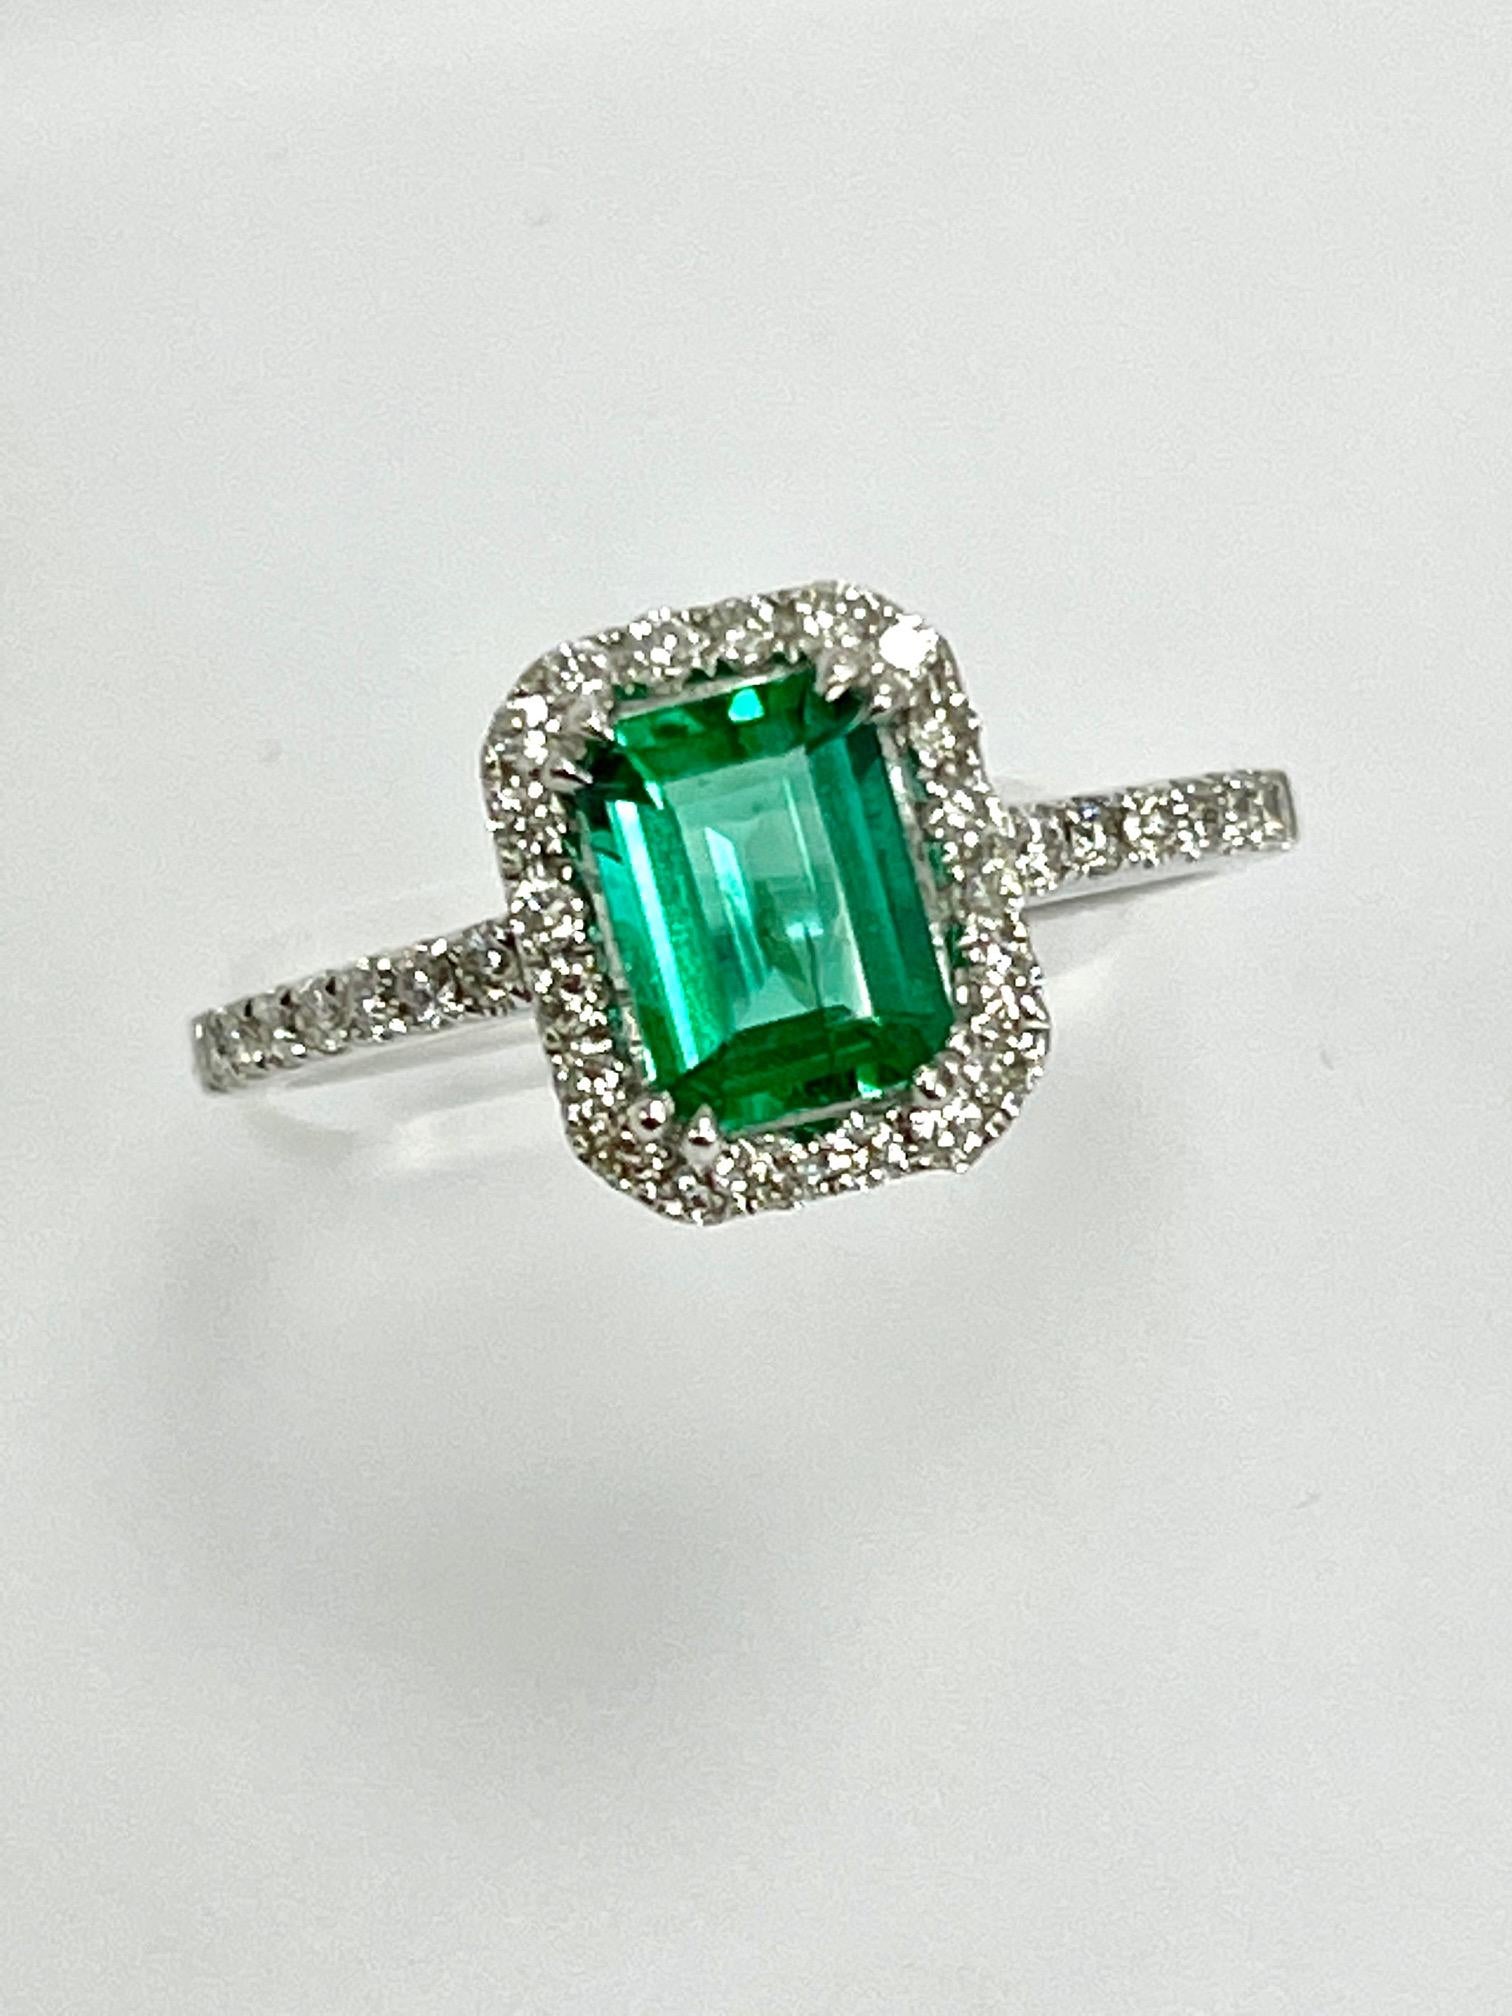 0.84 Carat Zambian emerald cut emerald set in 18k white gold ring with 0.36 carat diamonds .